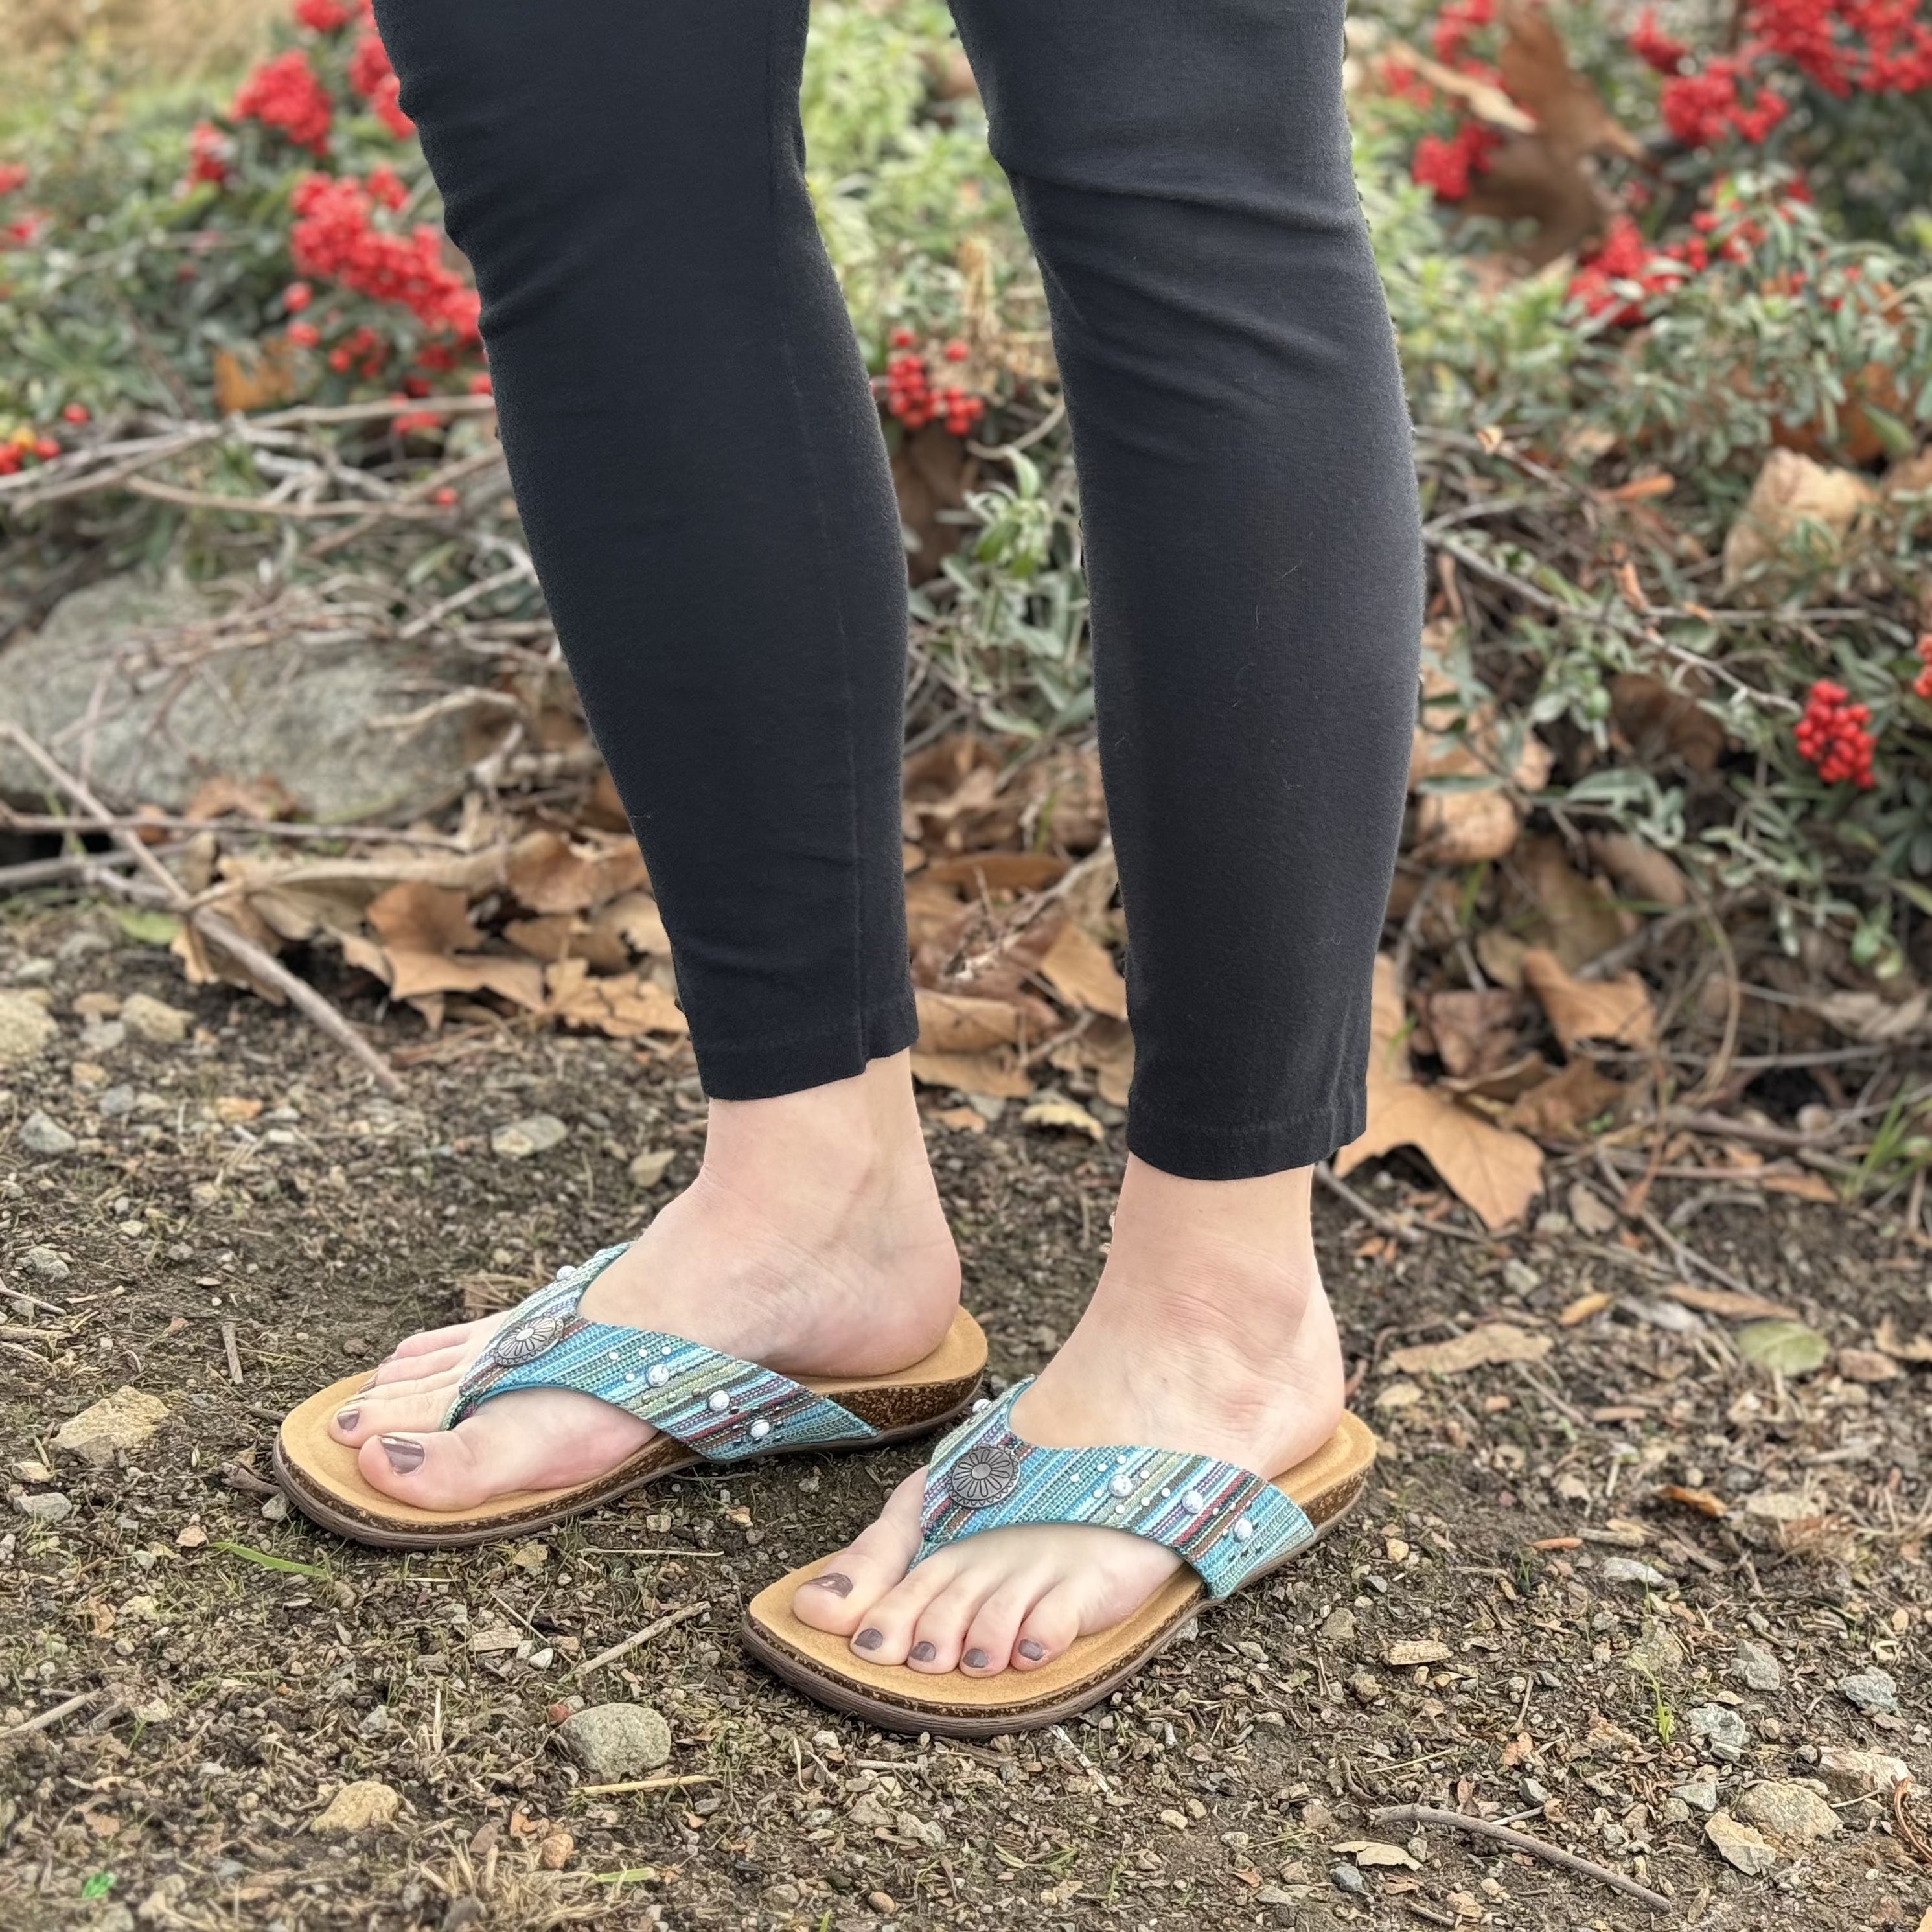 Jovie comfort sandal in turquoise